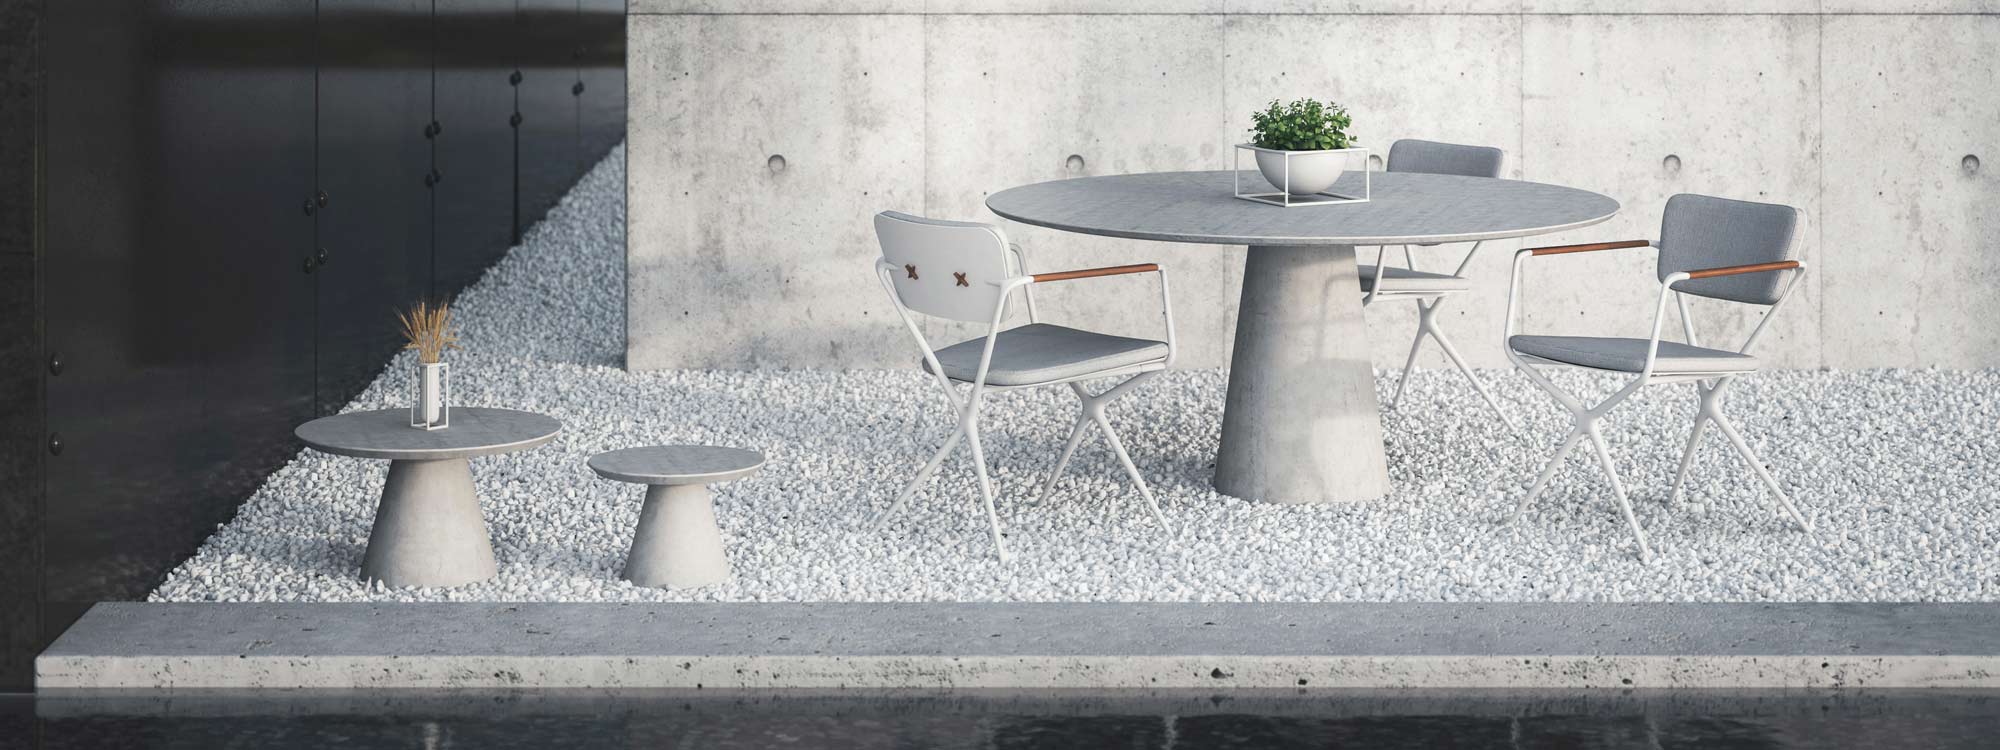 Image of Exes white garden chair with Conix concrete garden table by Royal Botania